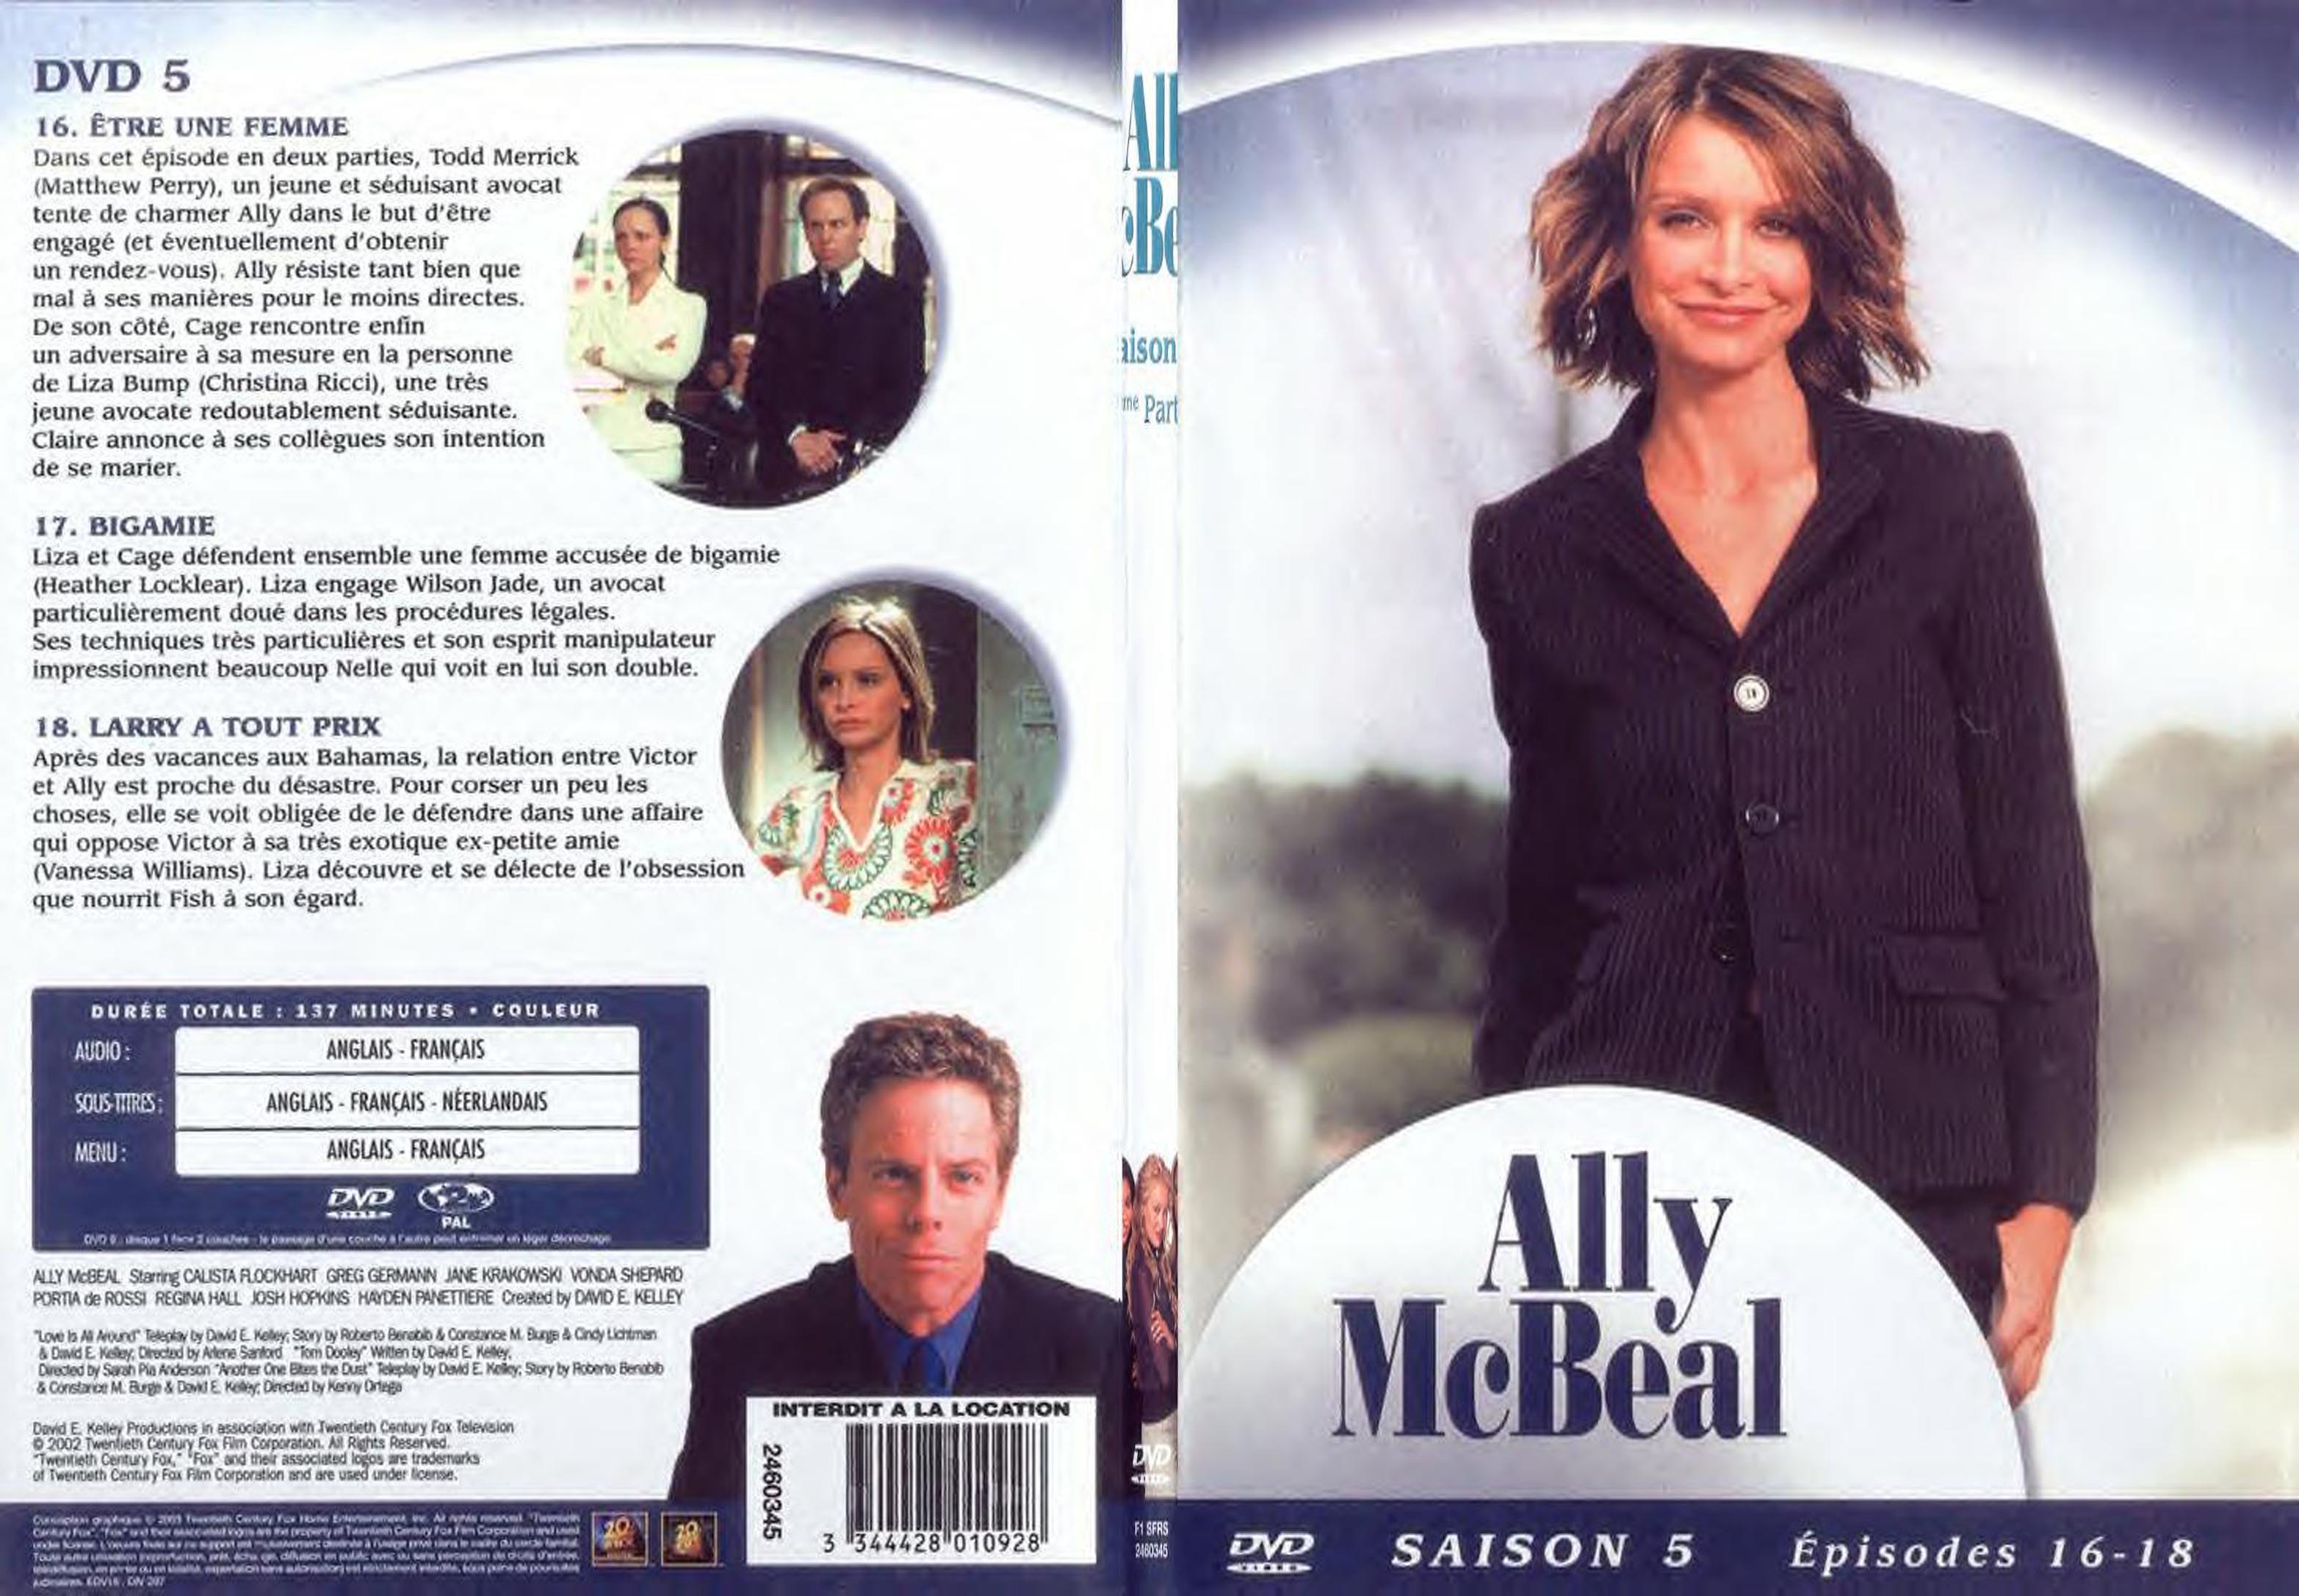 Jaquette DVD Ally McBeal saison 5 dvd 5 - SLIM